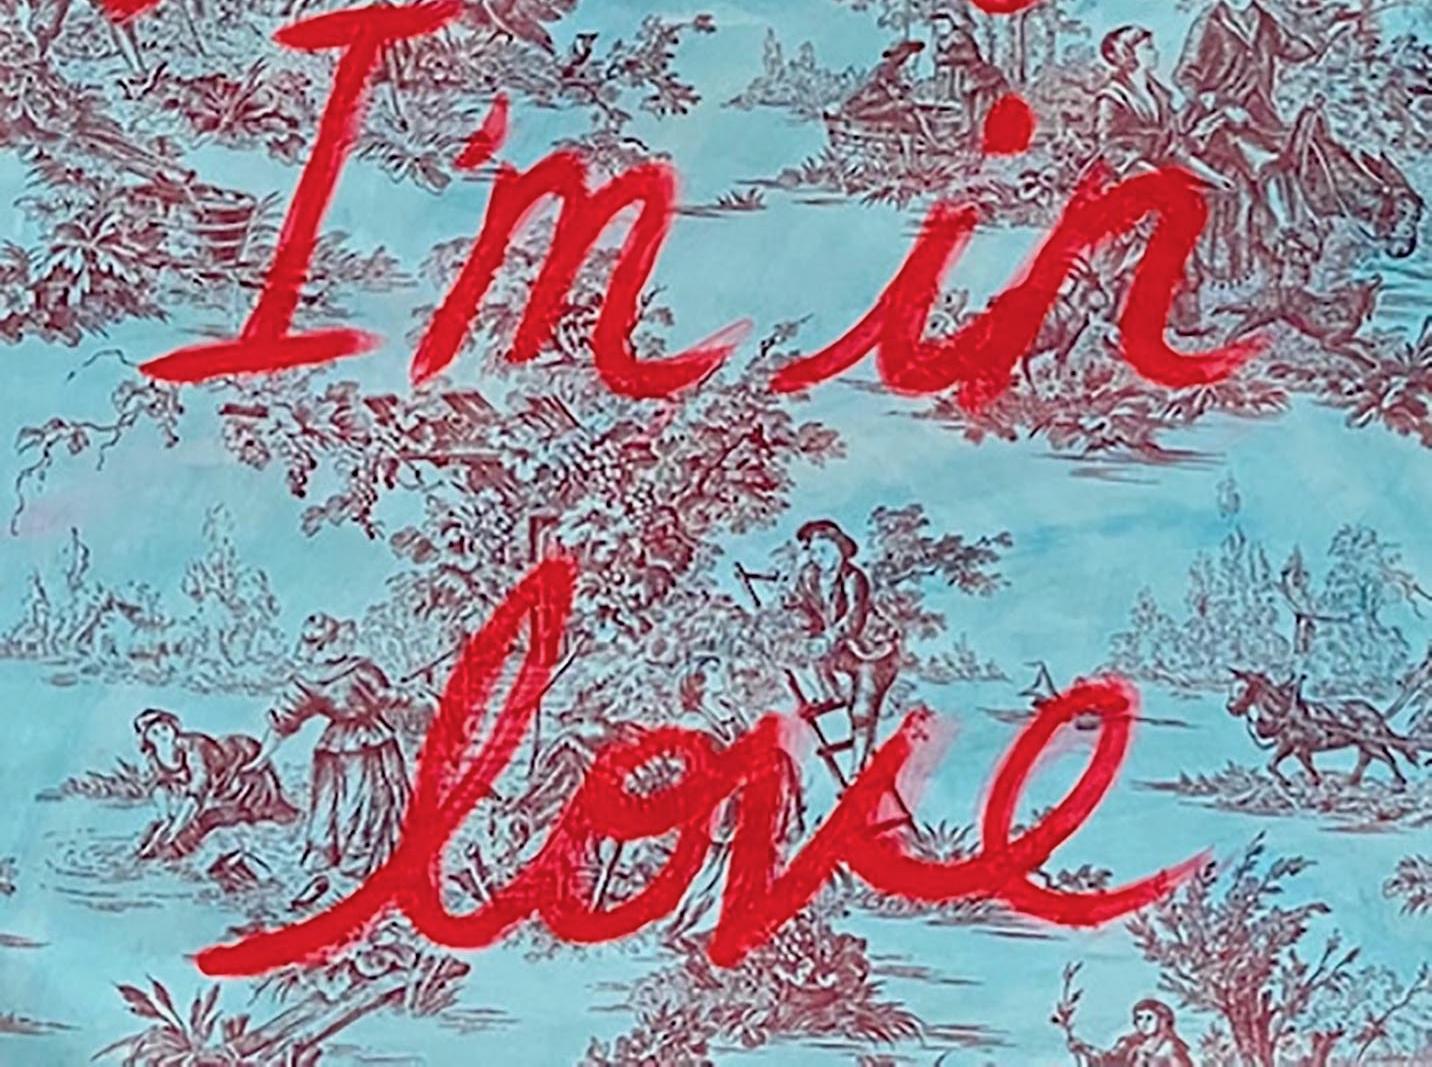 vendredi « I'm In Love » (rouge) - Art de Ayse Wilson